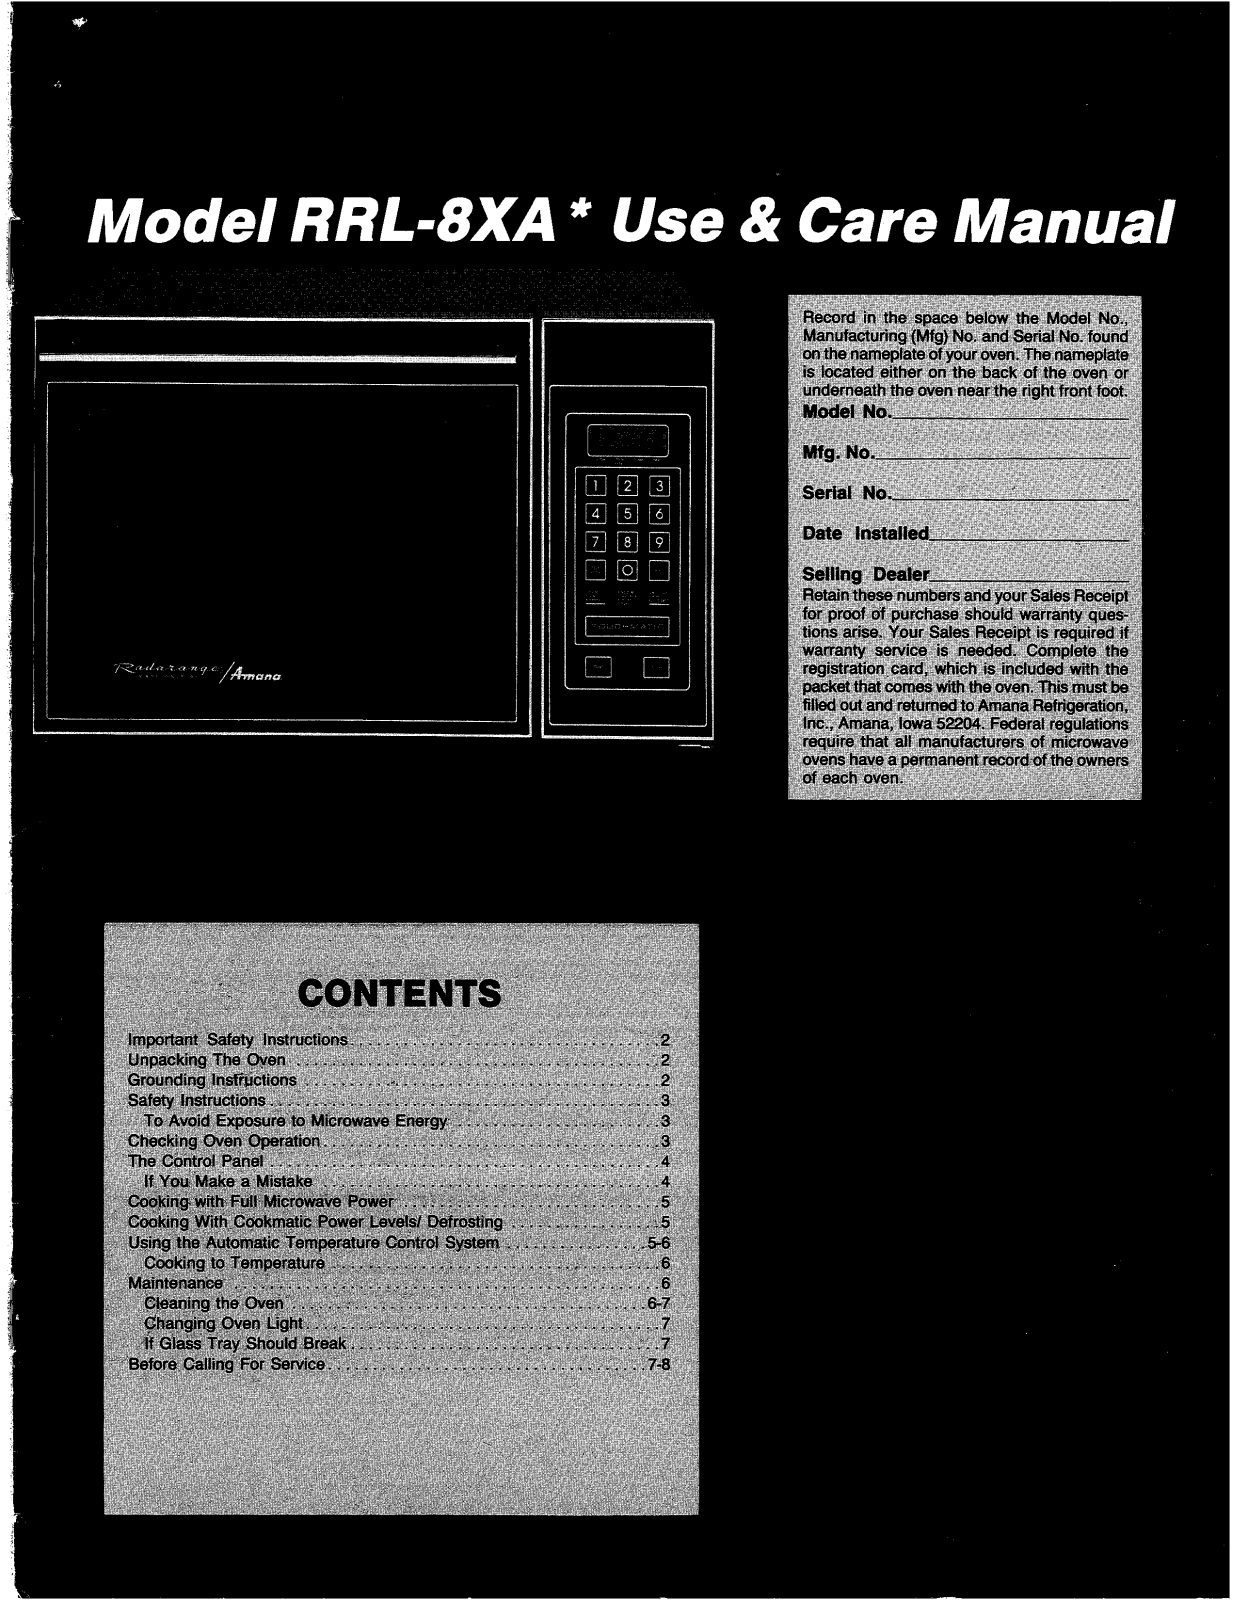 Amana CRRL-8XA-P76438-5M, RRL-8XA-P76438-4M Owner’s Manual